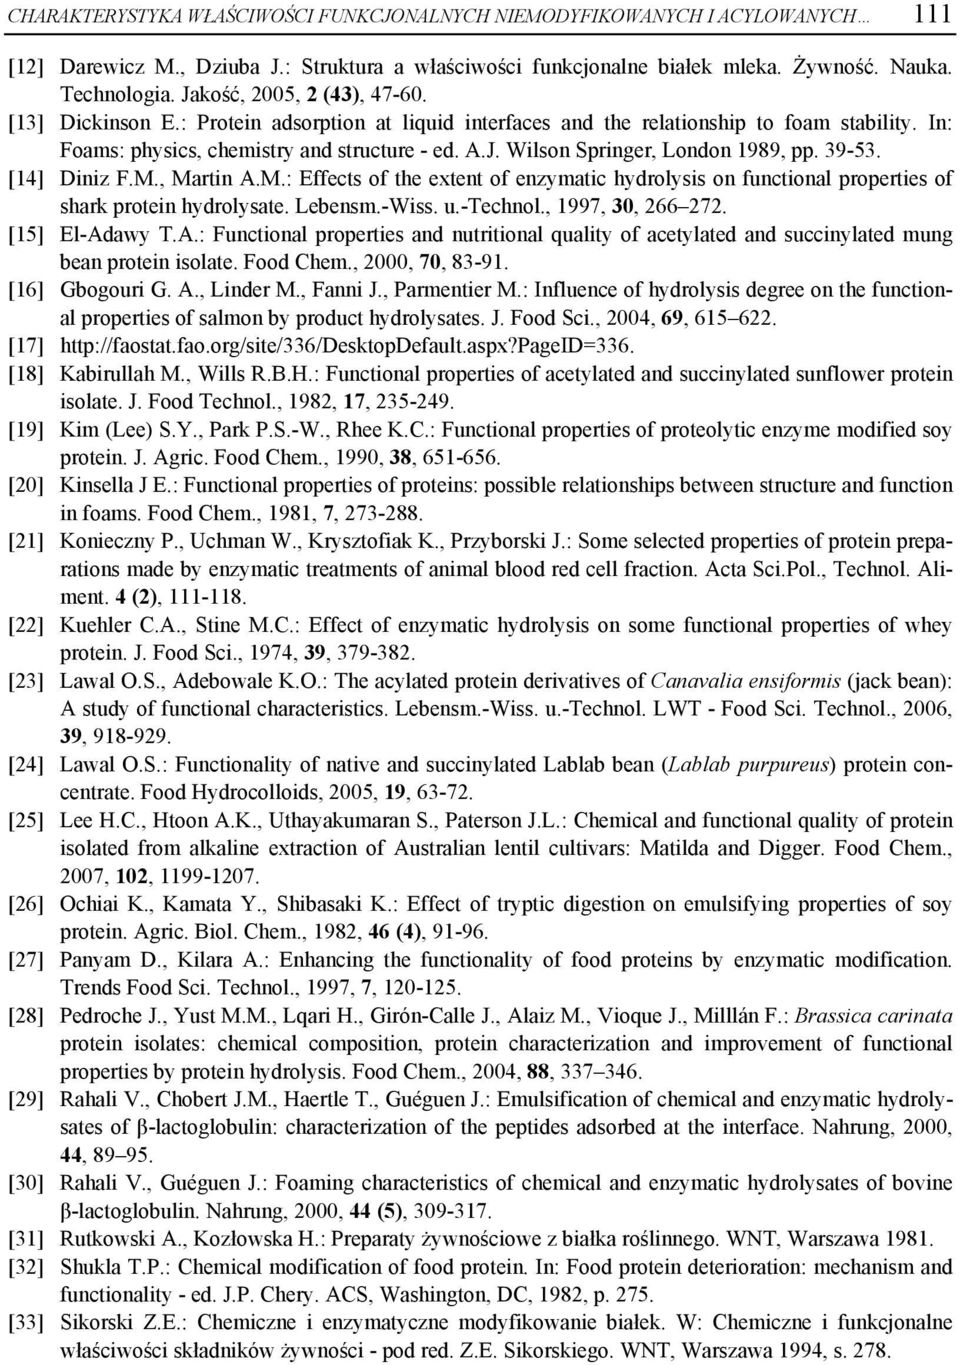 39-53. [14] Diniz F.M., Martin A.M.: Effects of the extent of enzymatic hydrolysis on functional properties of shark protein hydrolysate. Lebensm.-Wiss. u.-technol., 1997, 30, 266 272.